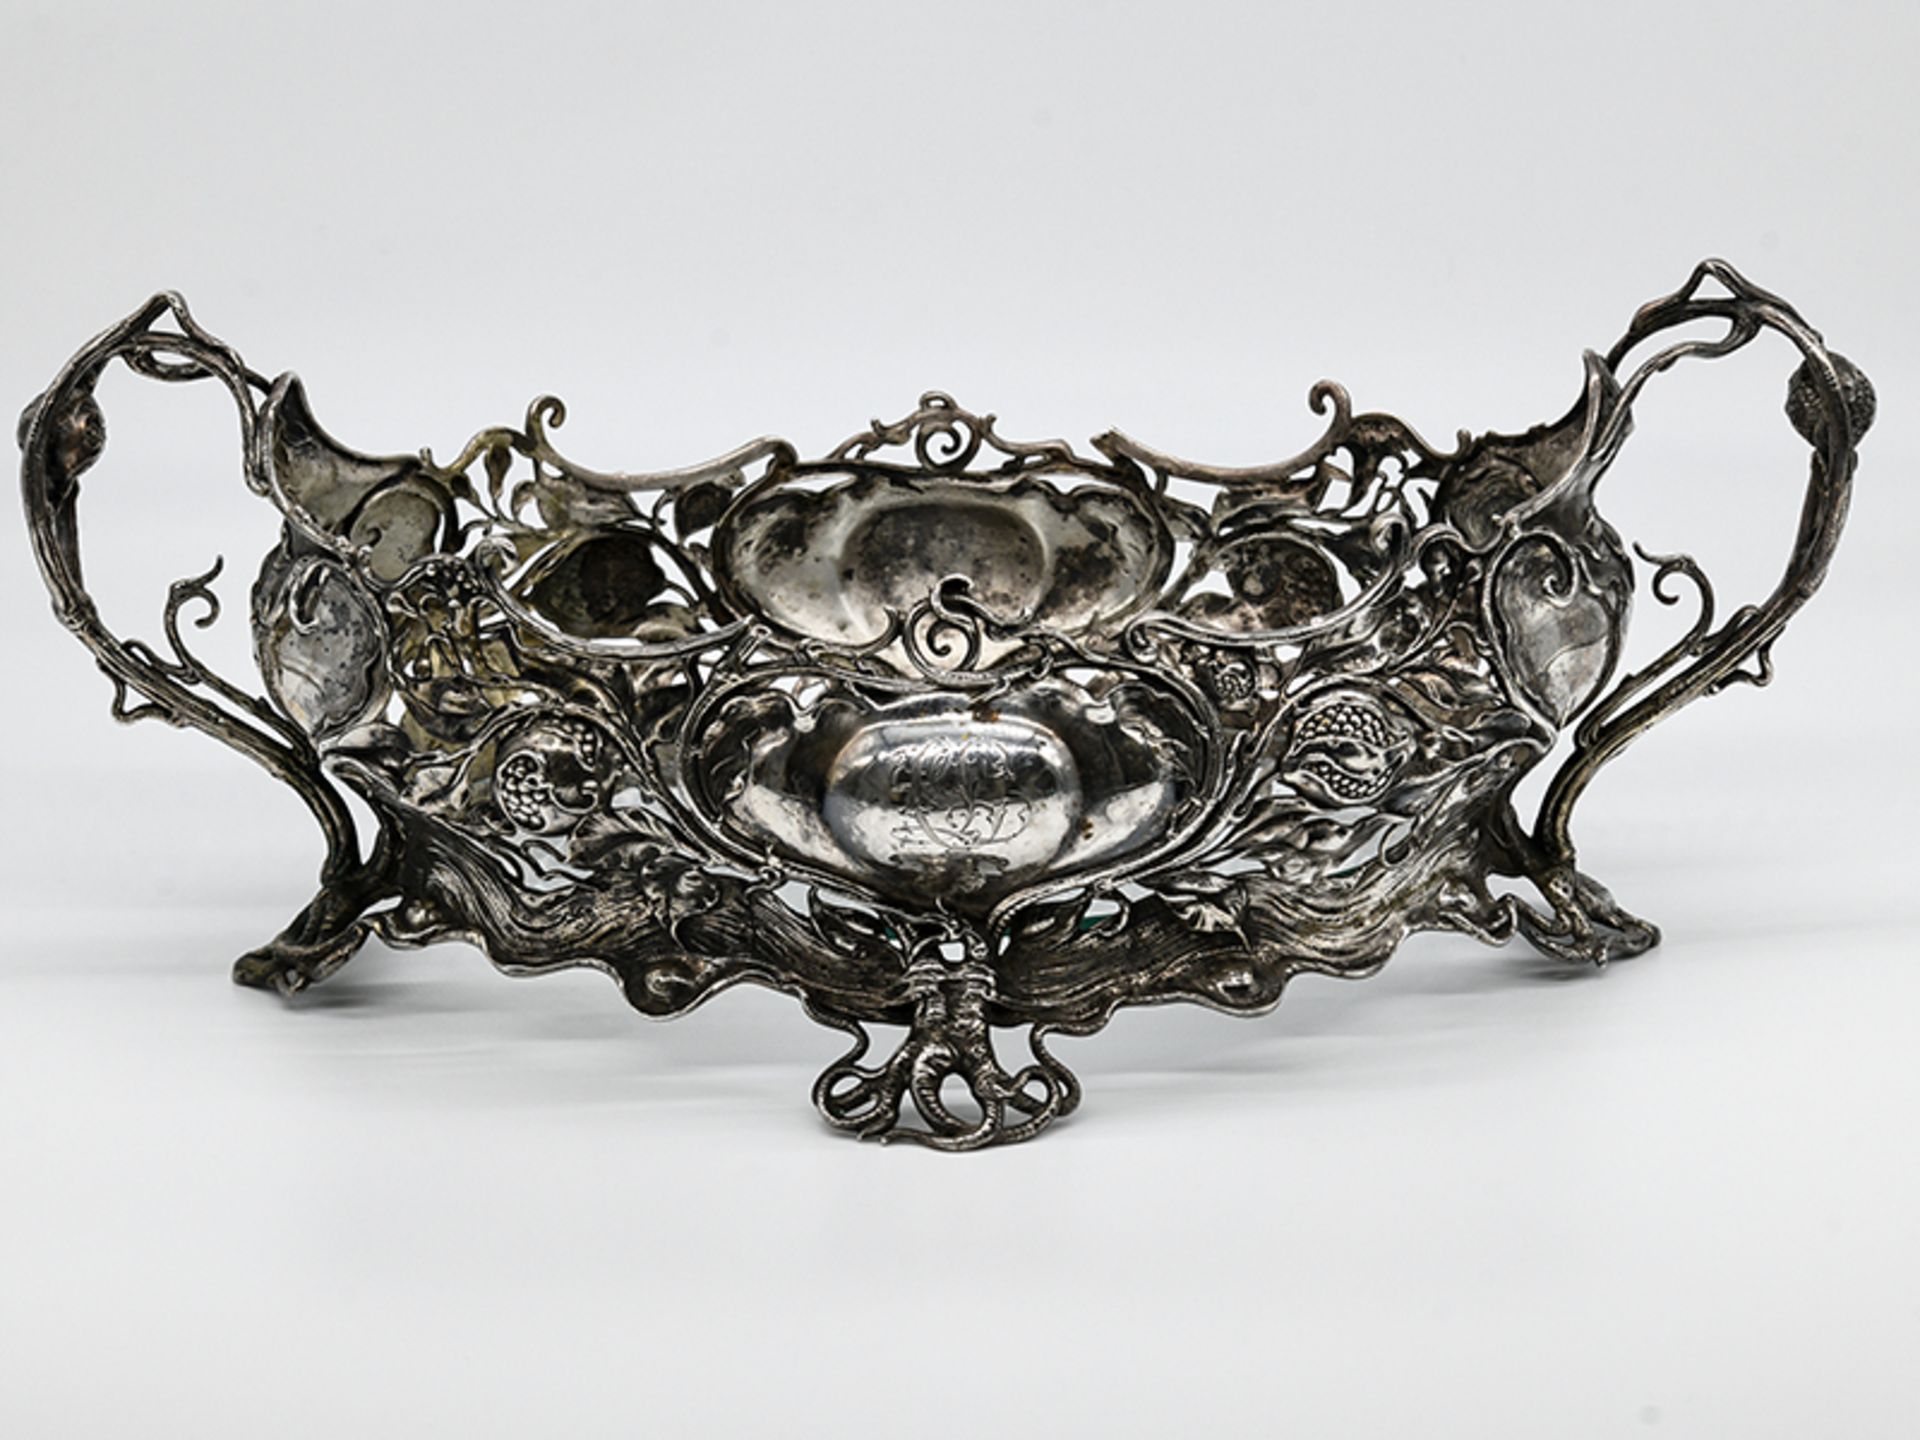 Große Jugendstil-Jardinière; um 1900.Versilbert; ovales Metallgestell in floral-reliefierter und